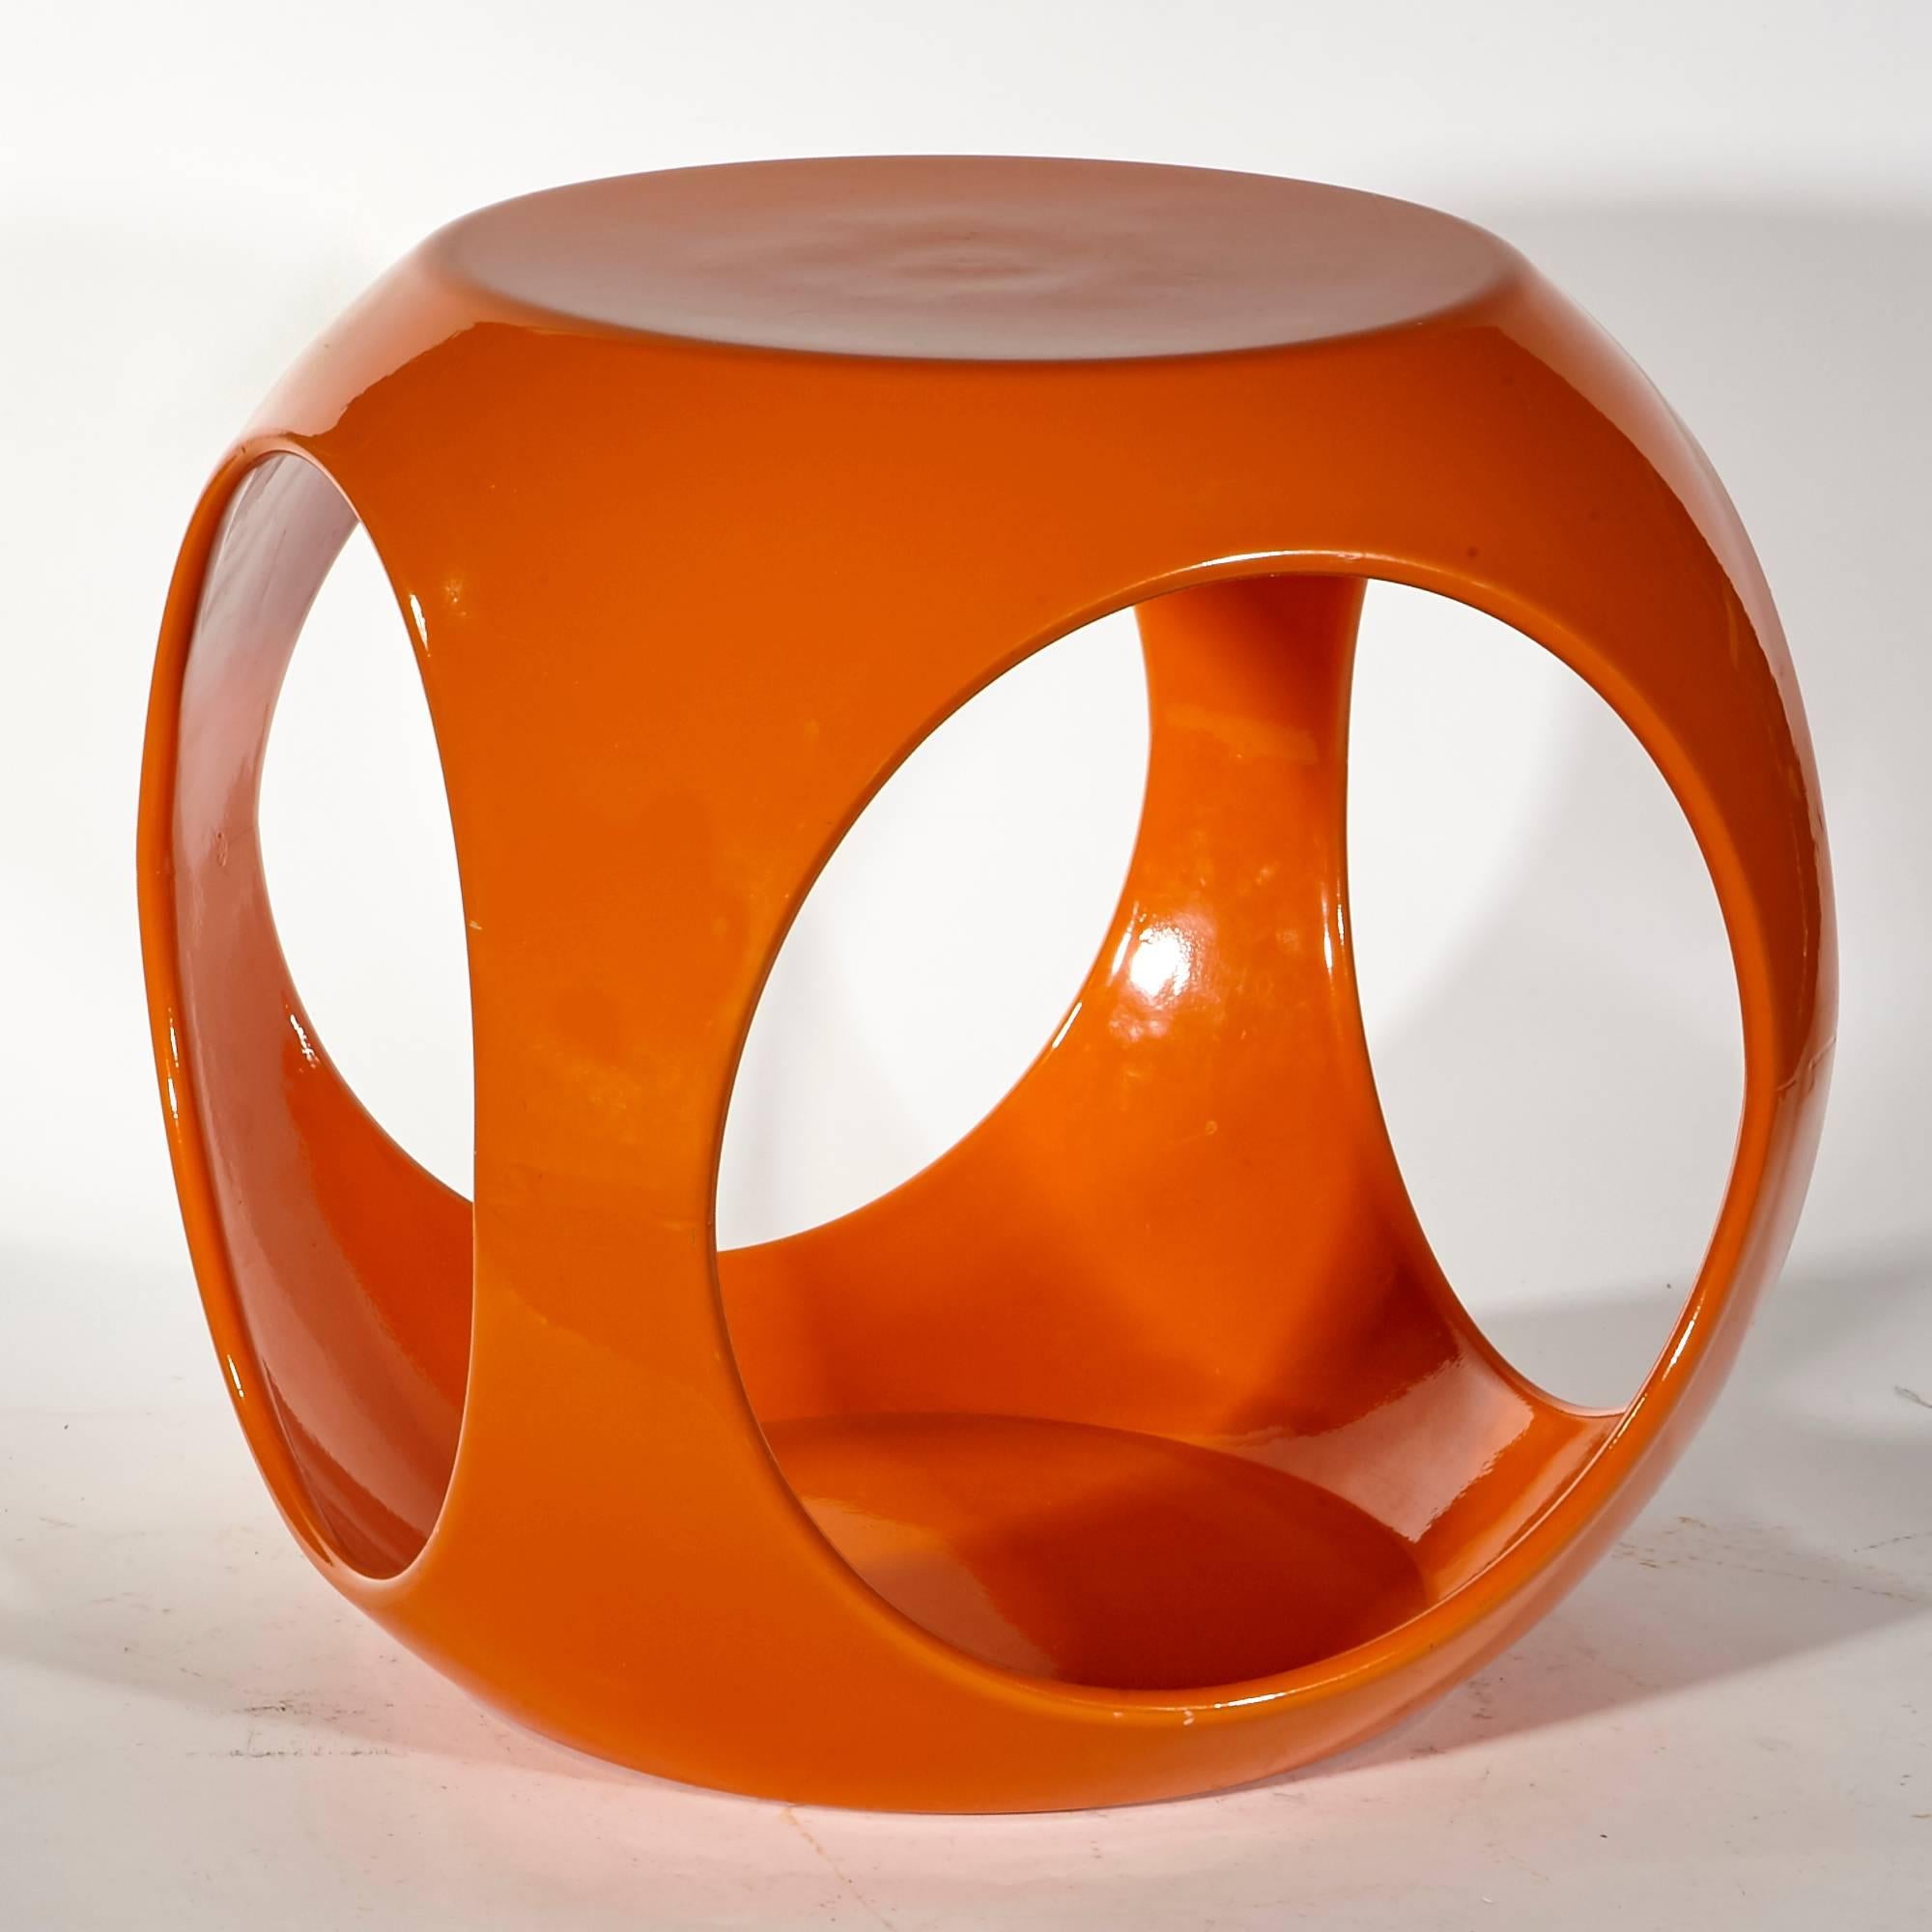 Vintage 1970s orange fiberglass side table in the style of Luigi Colani designs. Unmarked.